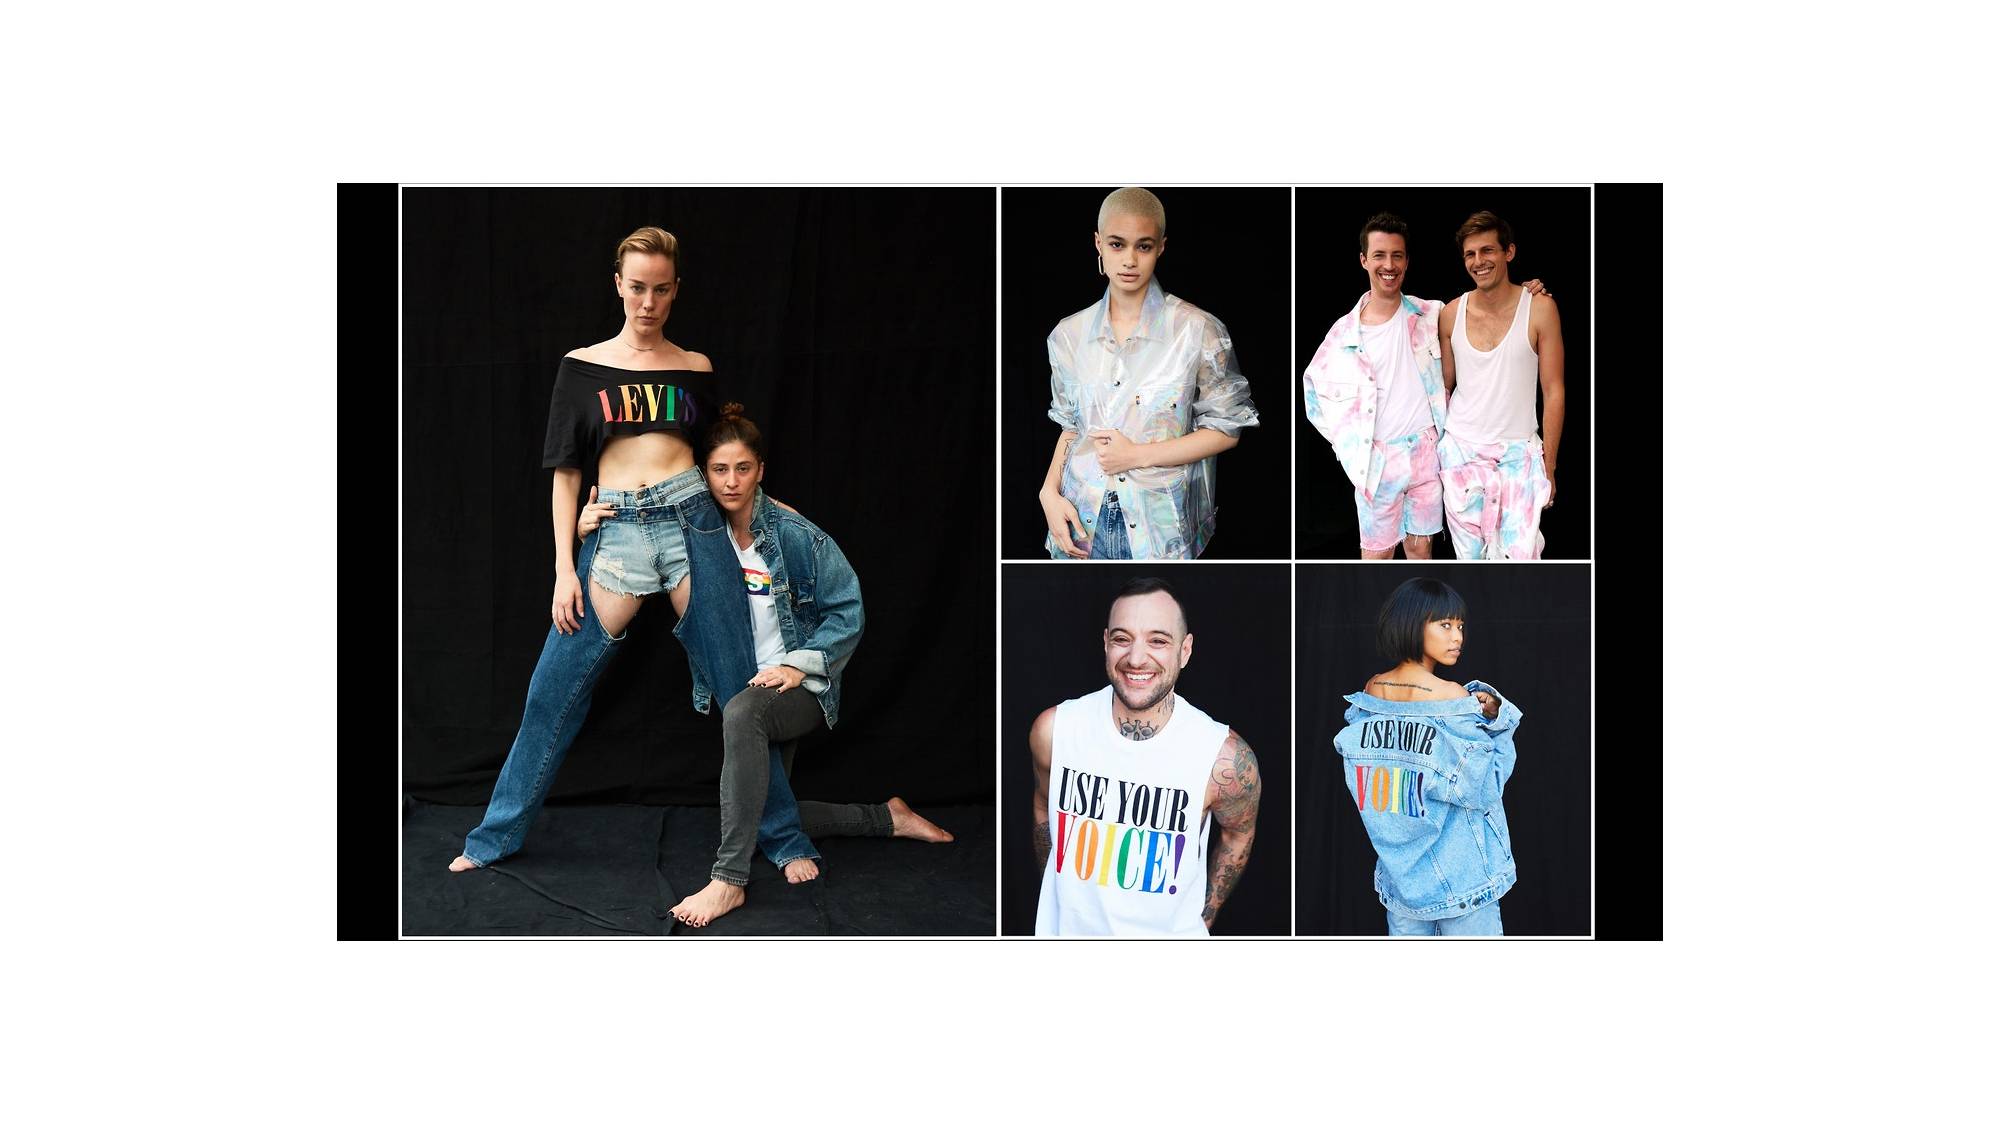 Models in pride apparel against black background